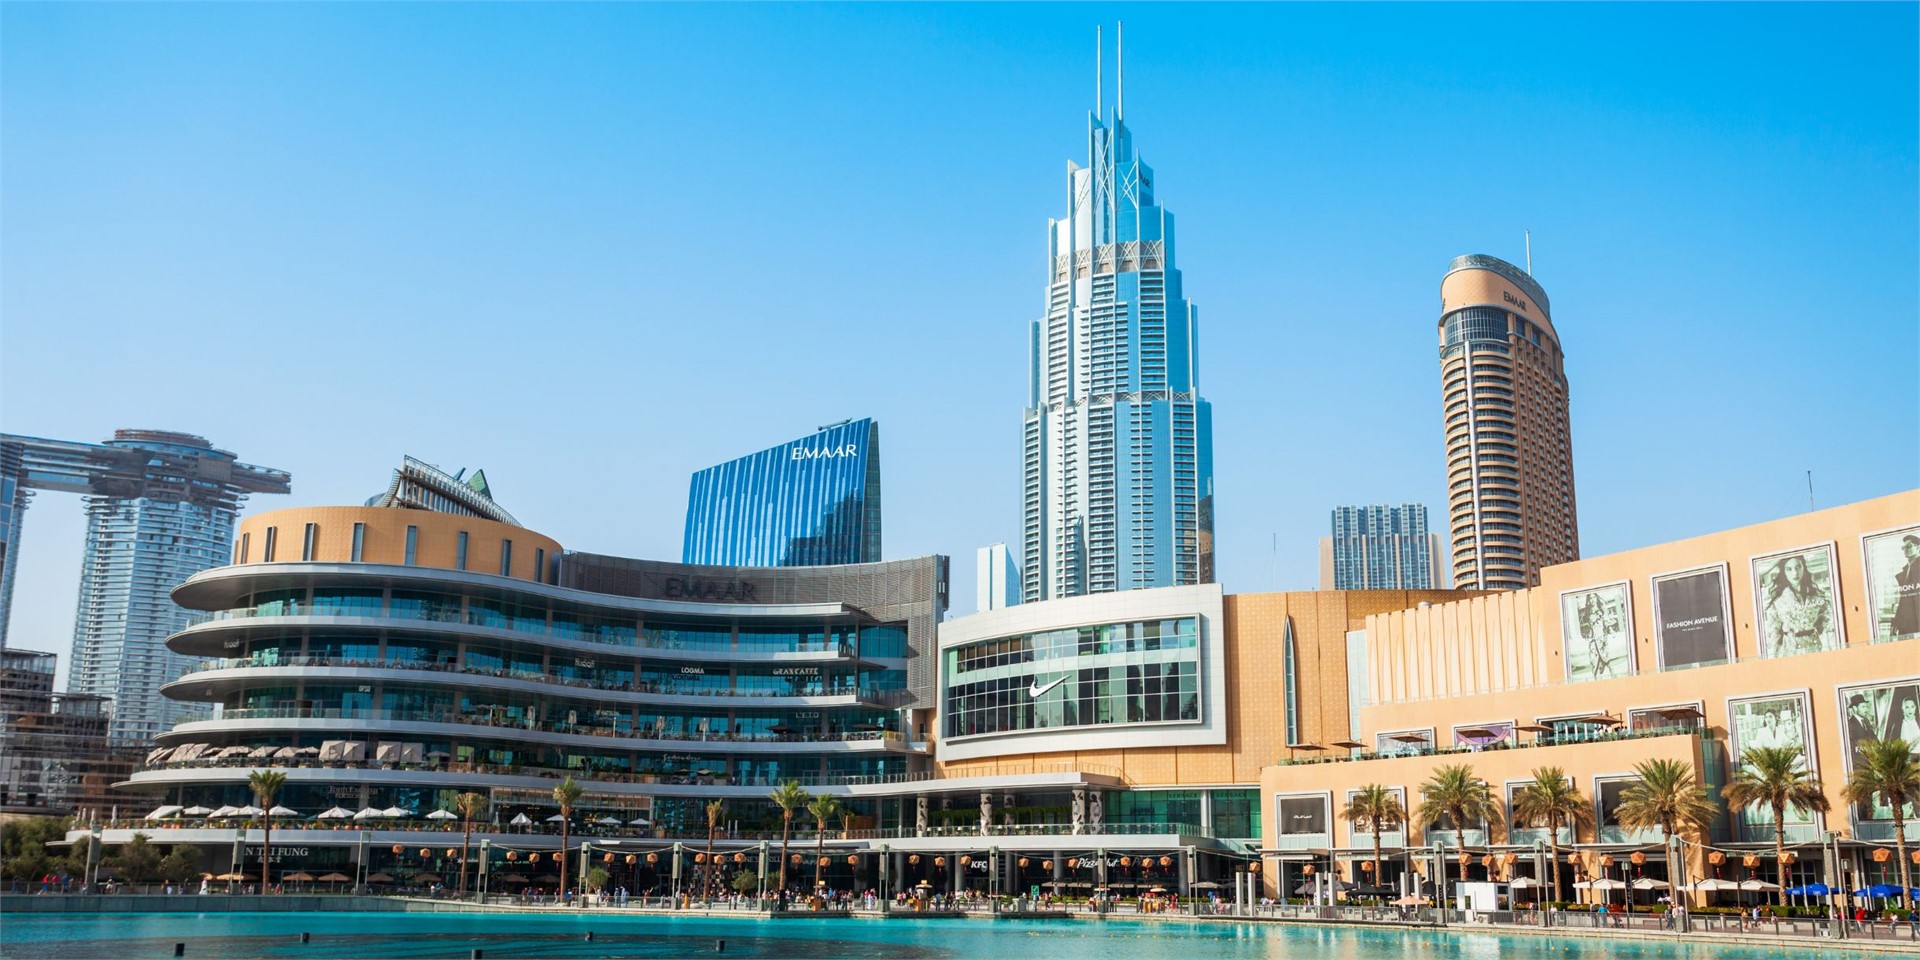 Buche Deine Reise zum Shopping Festival in Dubai
